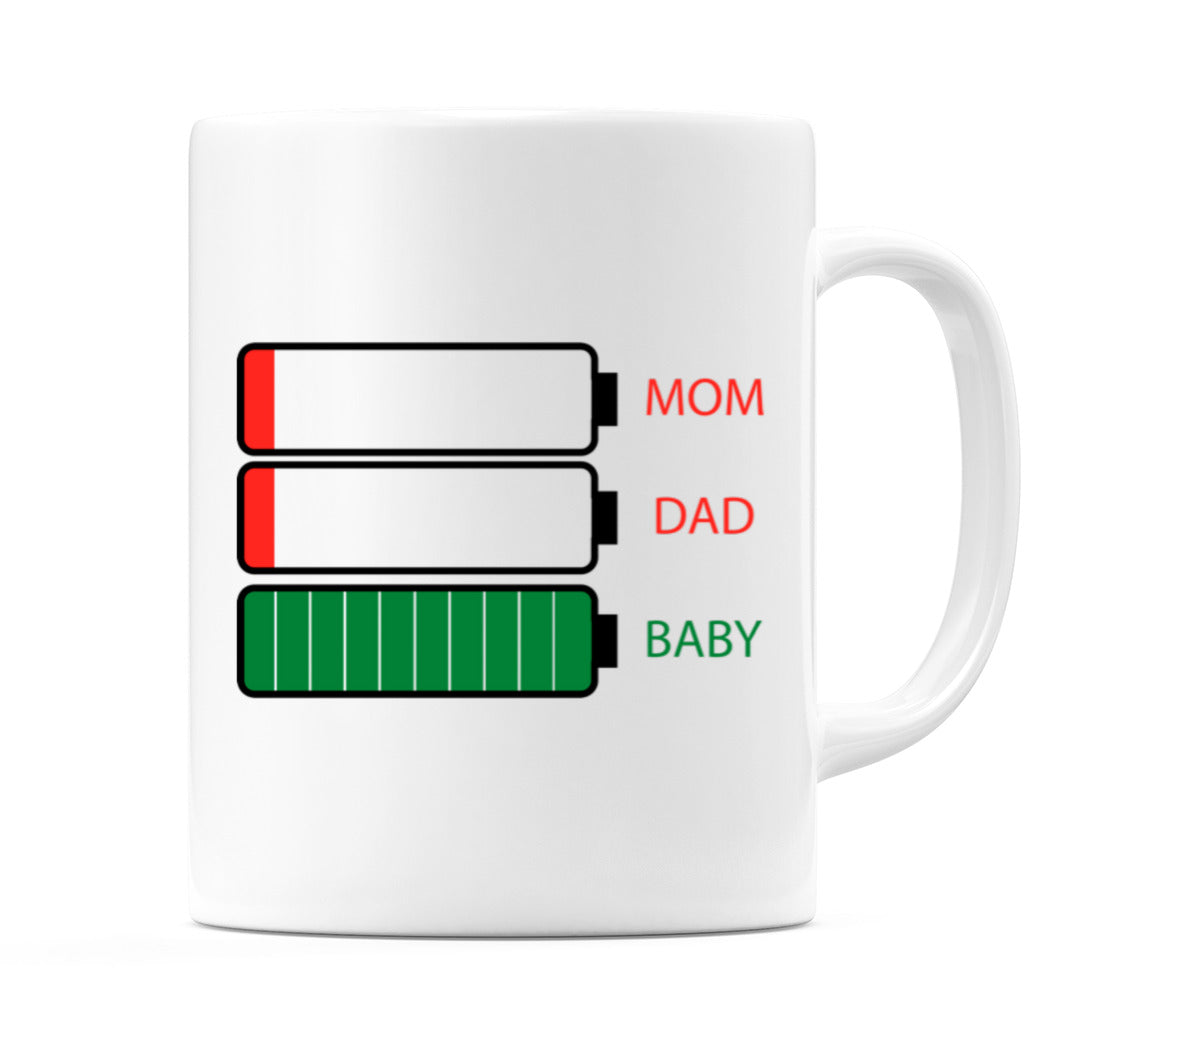 Mom Dad Baby Battery Level Mug